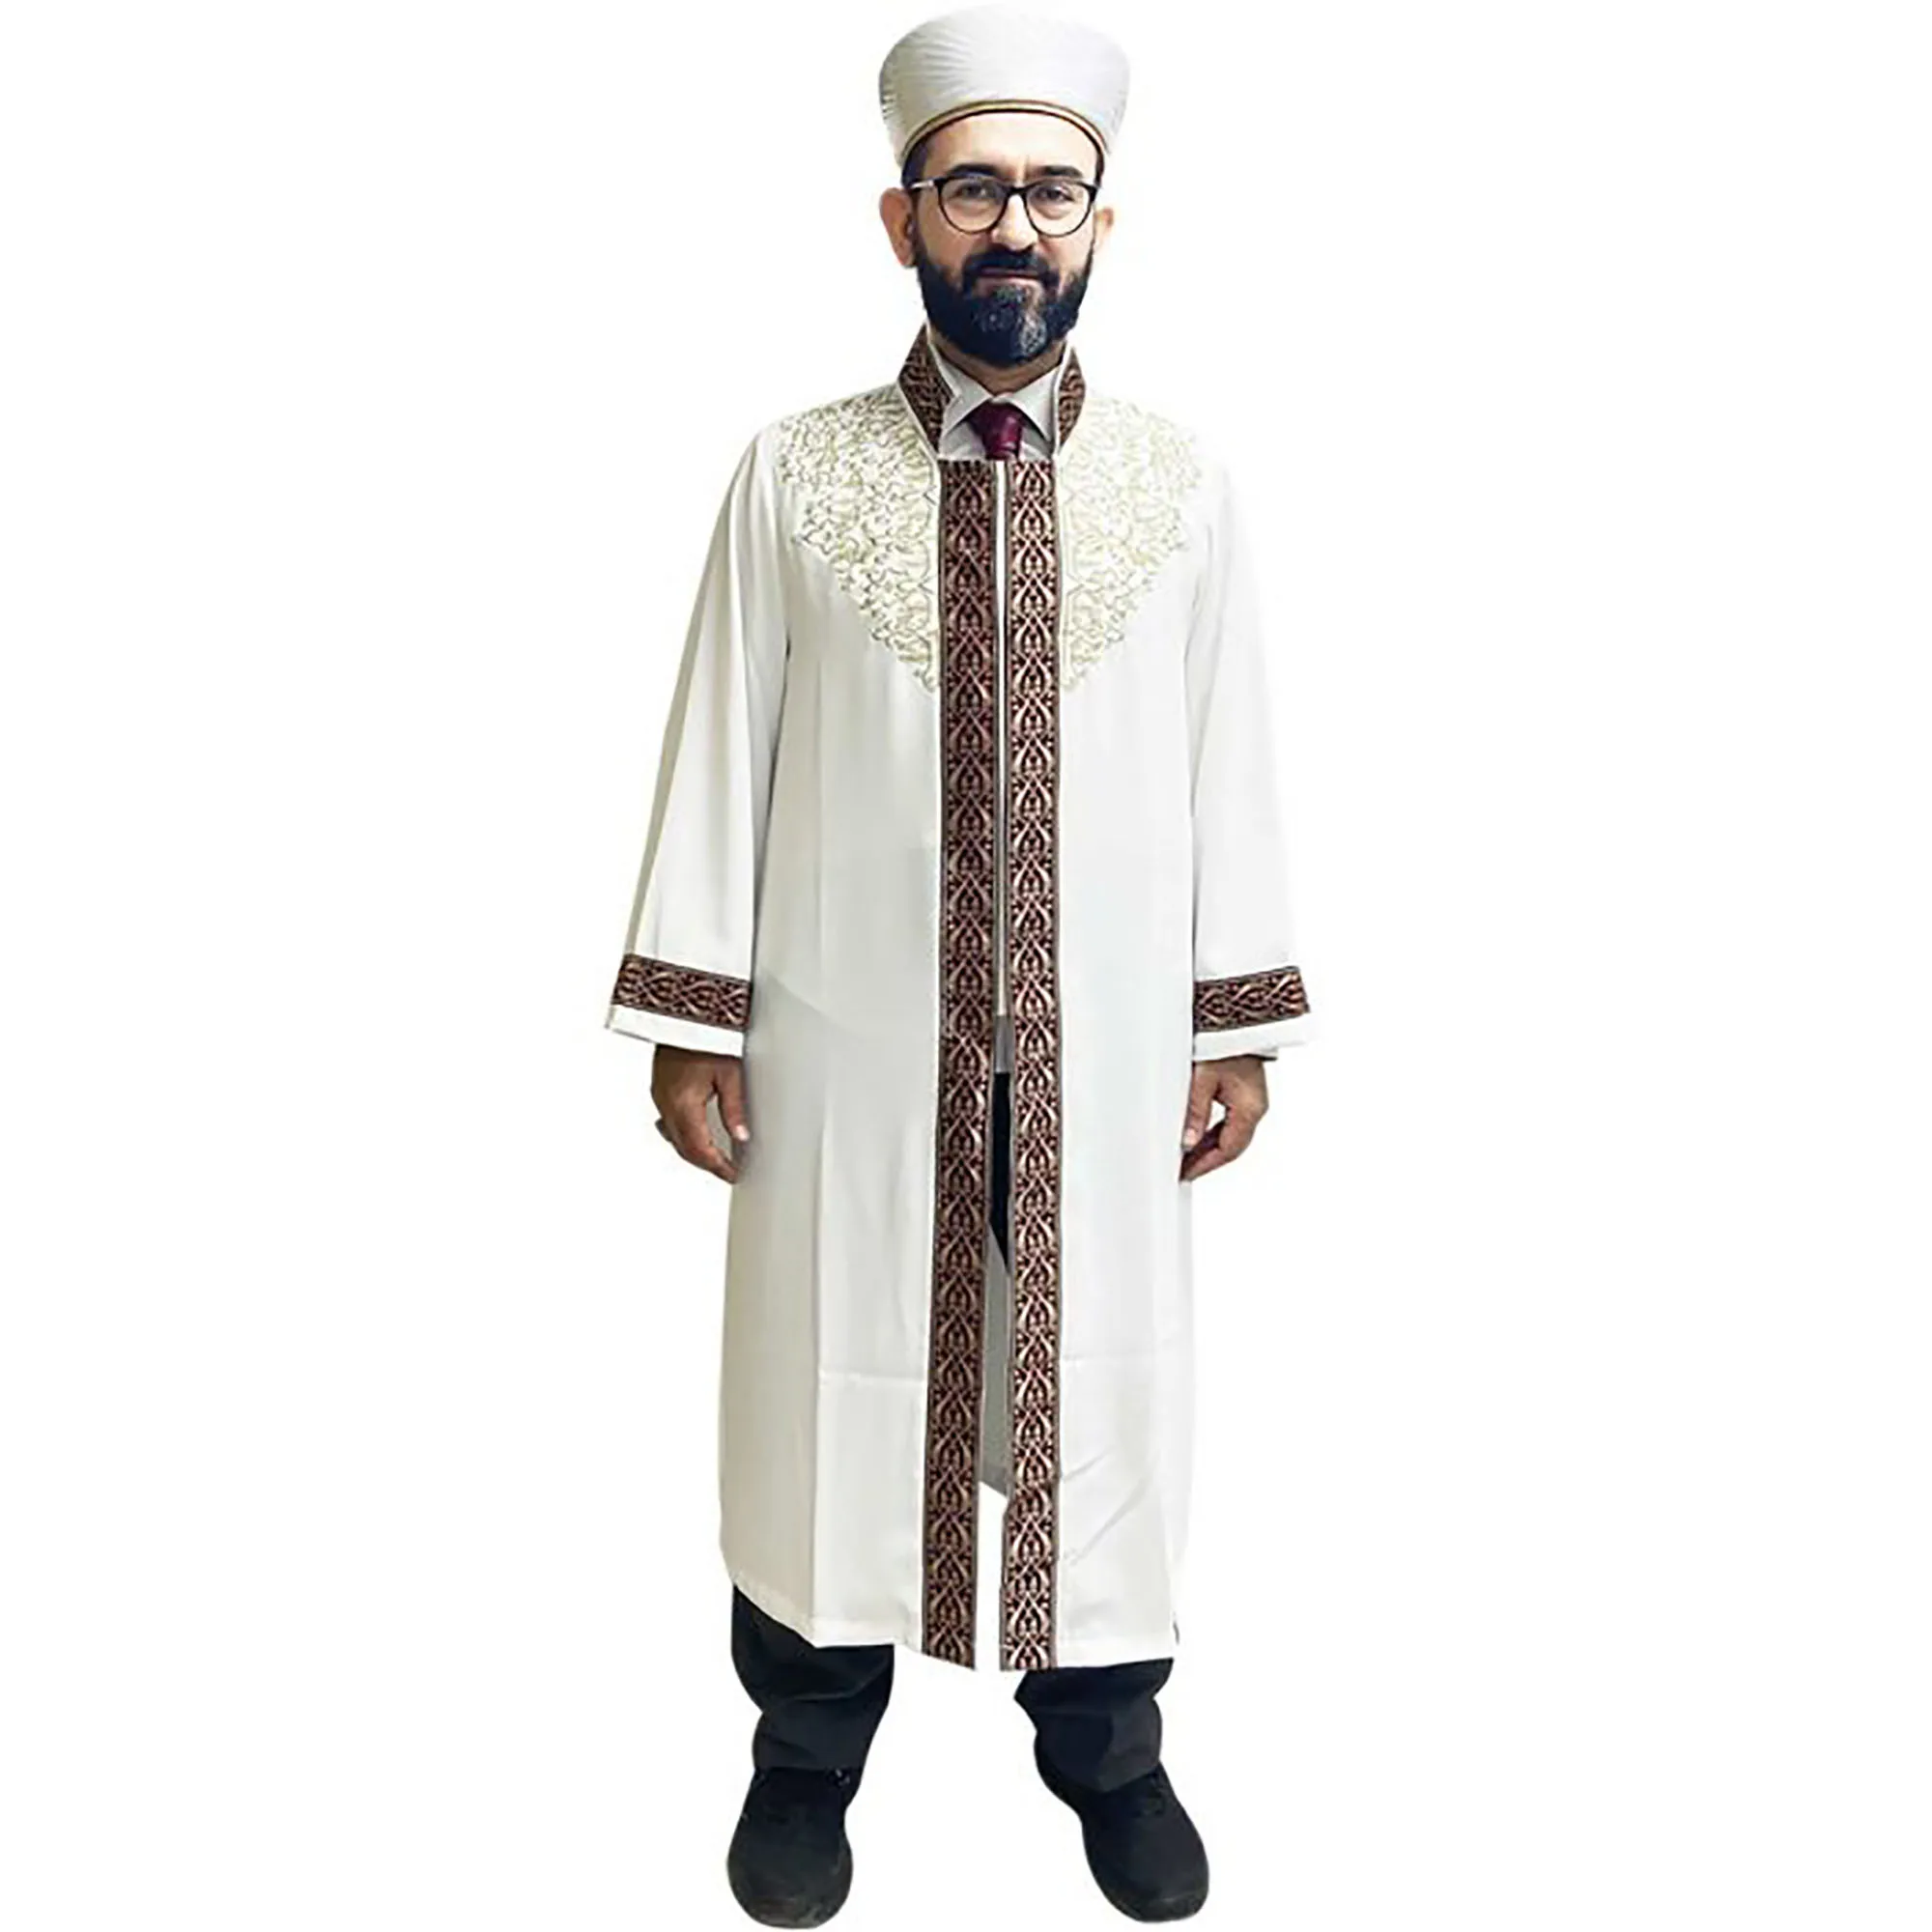 White Gold Imam Robe, Islamic Clothe, Praying Cubba Male, Muslim Prayer Dress, Traditional Religious Arabic Fashion, Taqwa Style